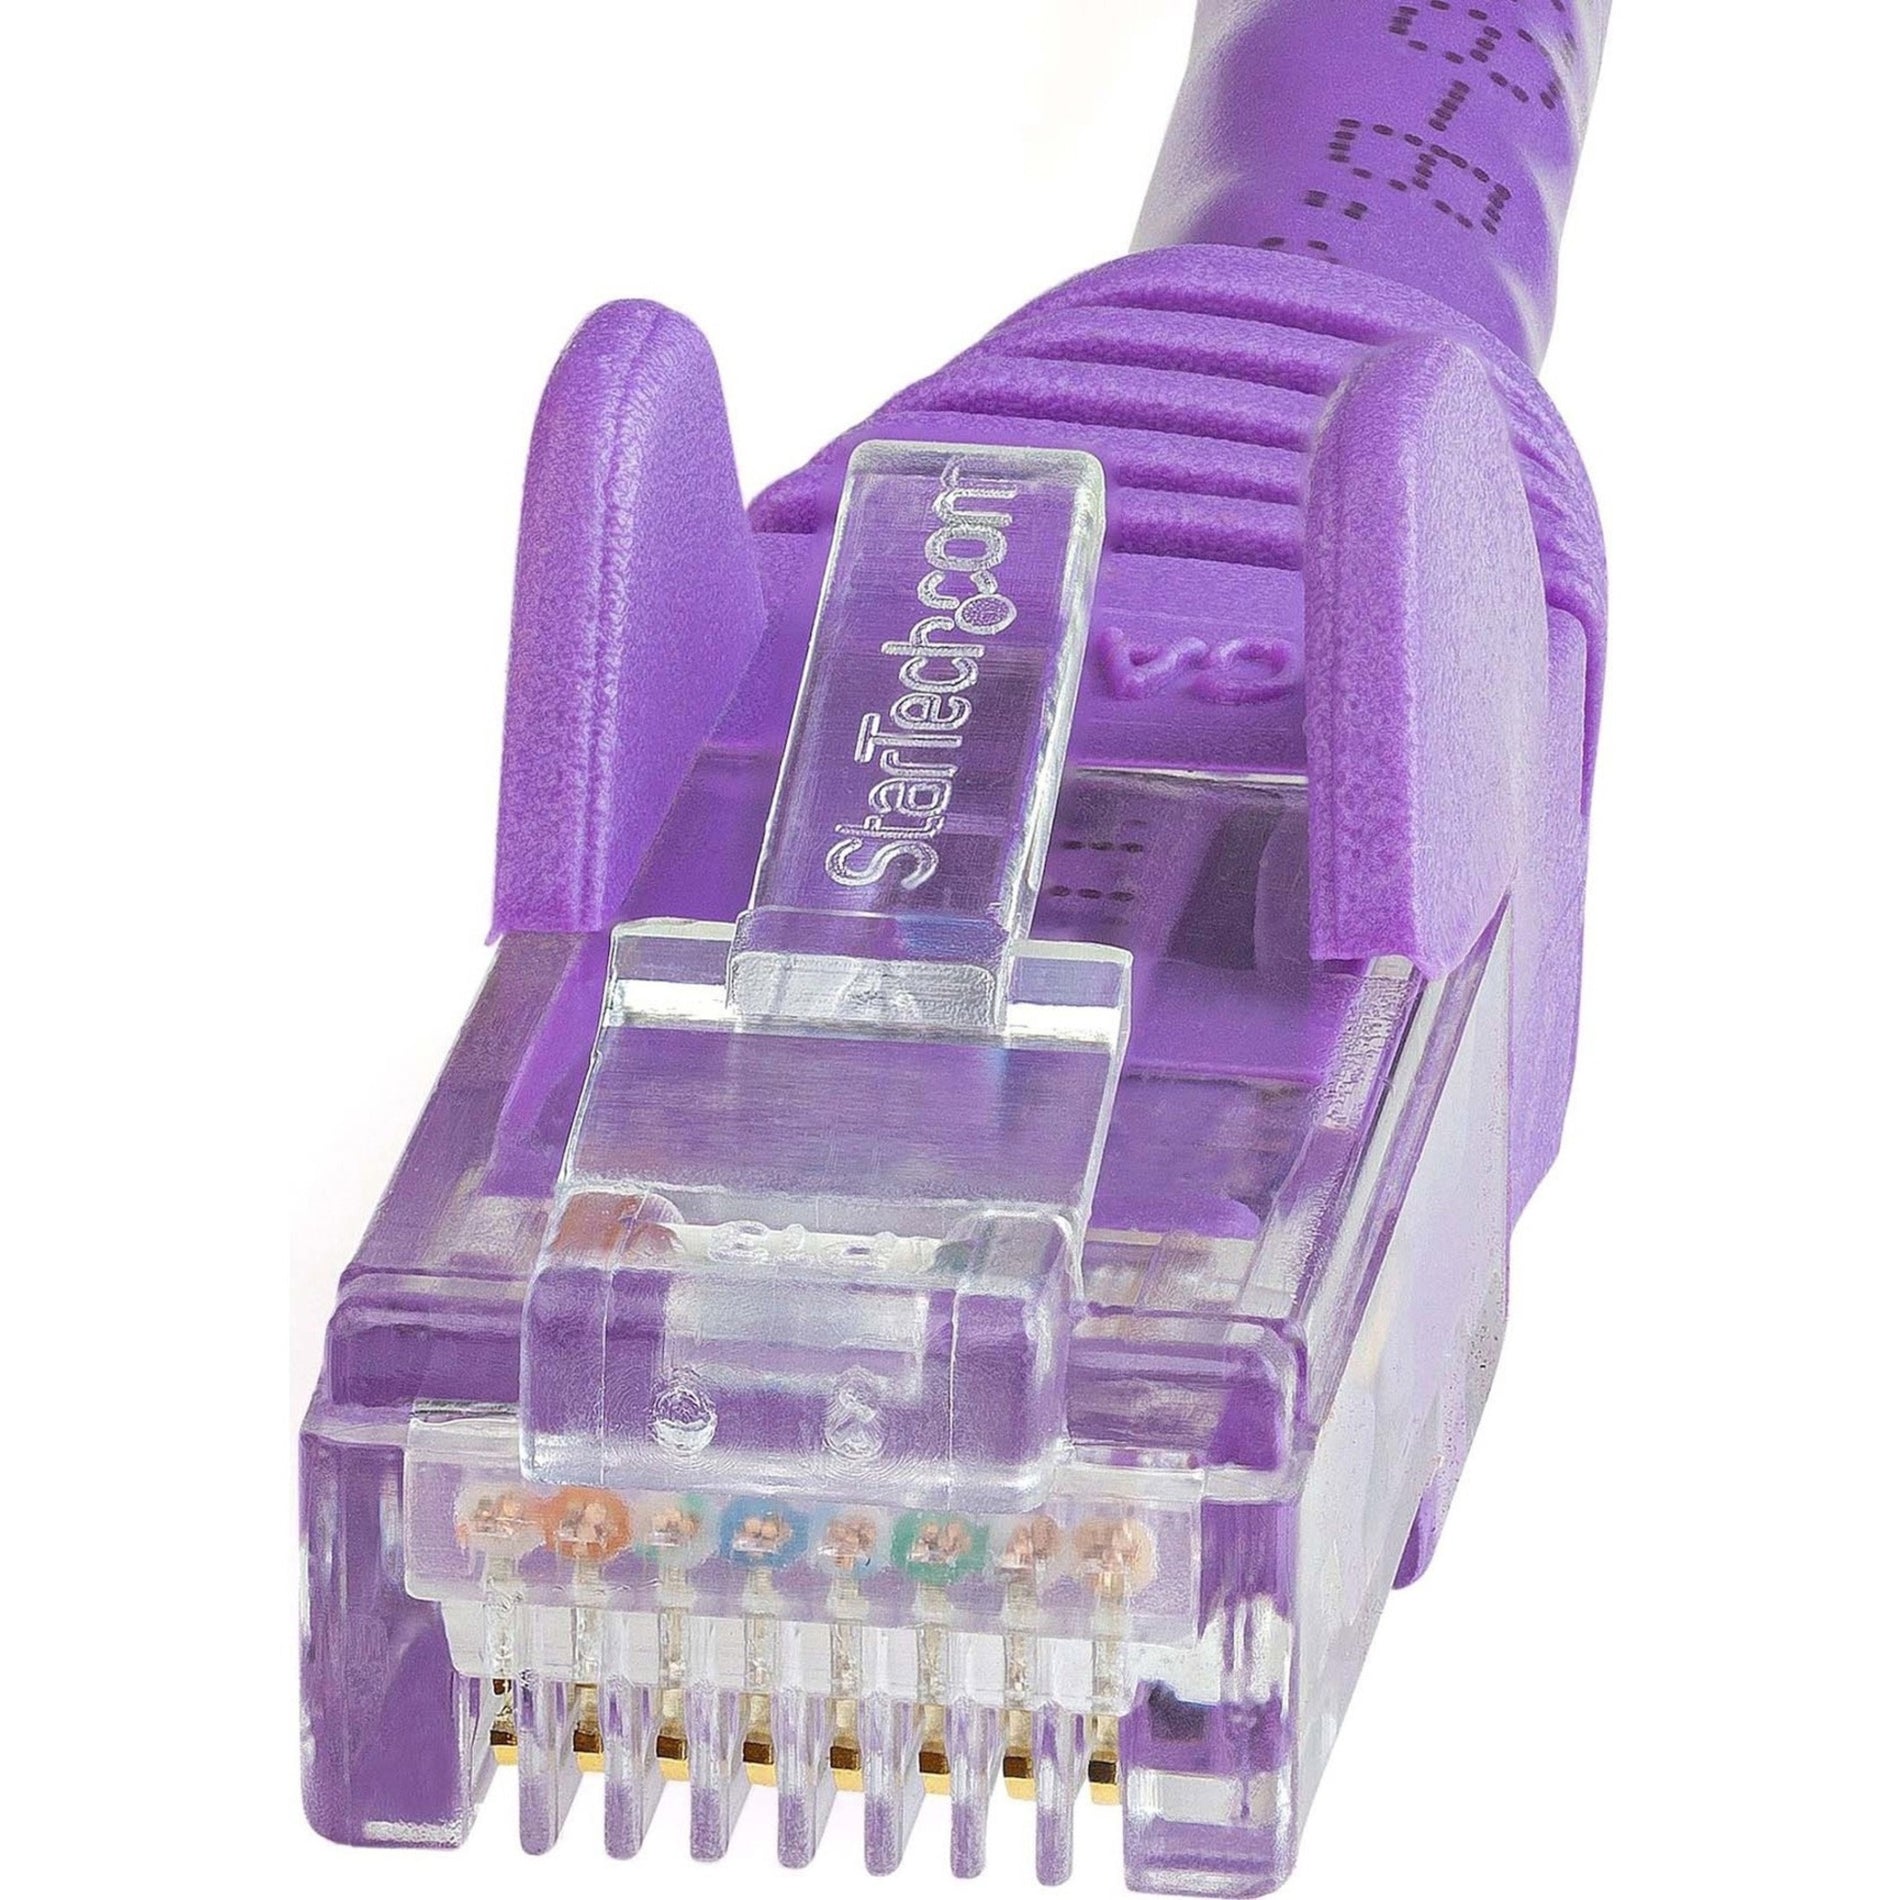 StarTech.com N6PATCH12PL Cat6 Patch Cable, 12ft Purple Ethernet Cable with Snagless RJ45 Connectors